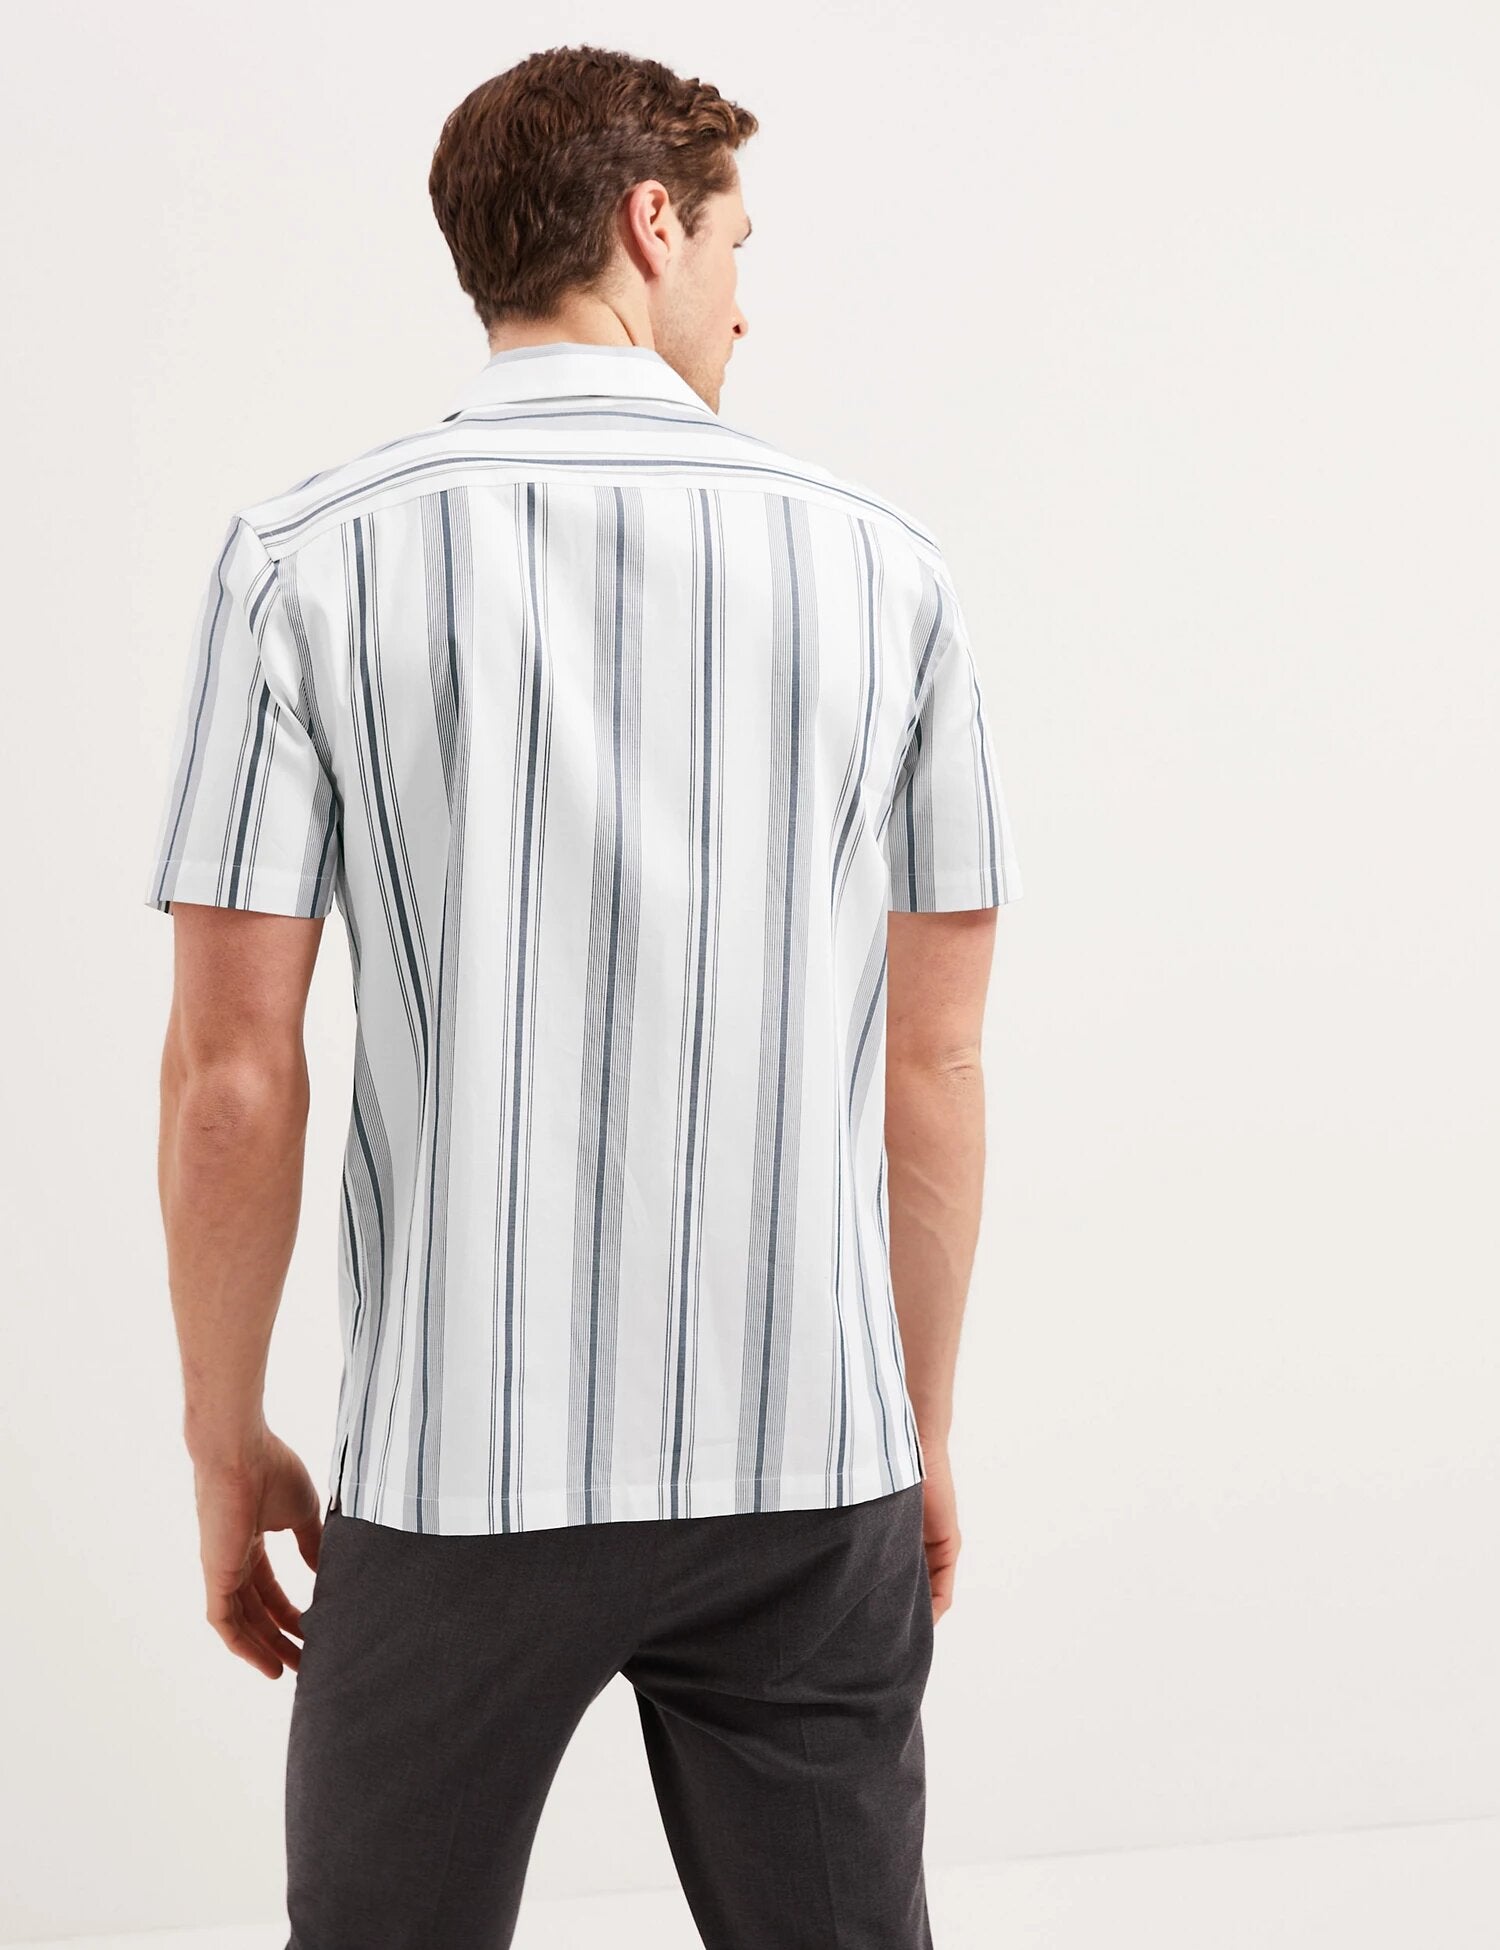 Pure Cotton Striped Revere Shirt